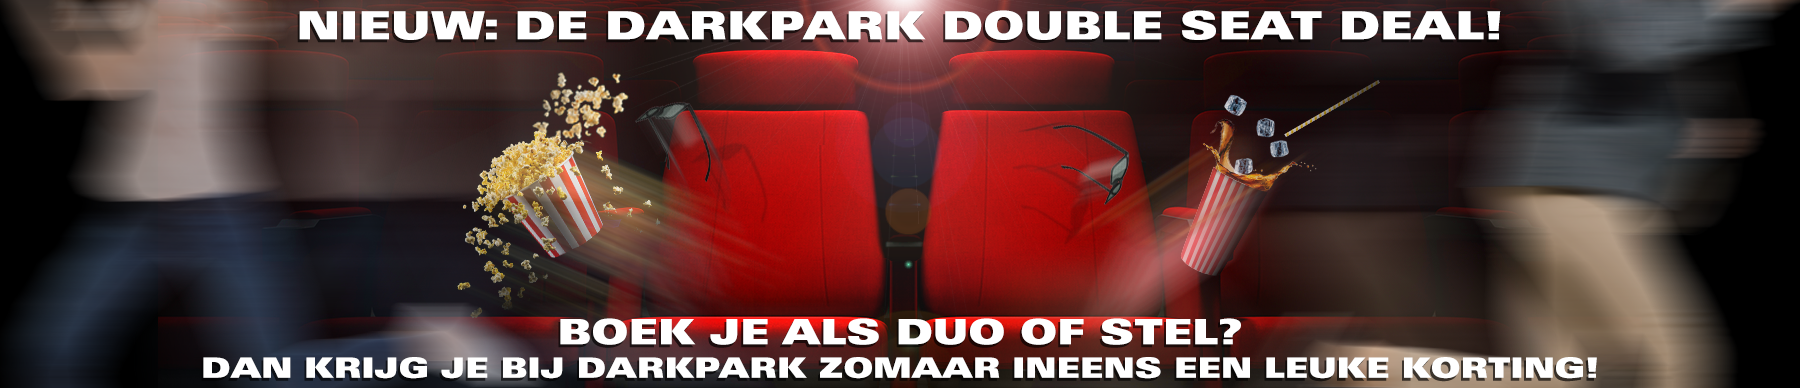 DarkPark Double Seat Deal